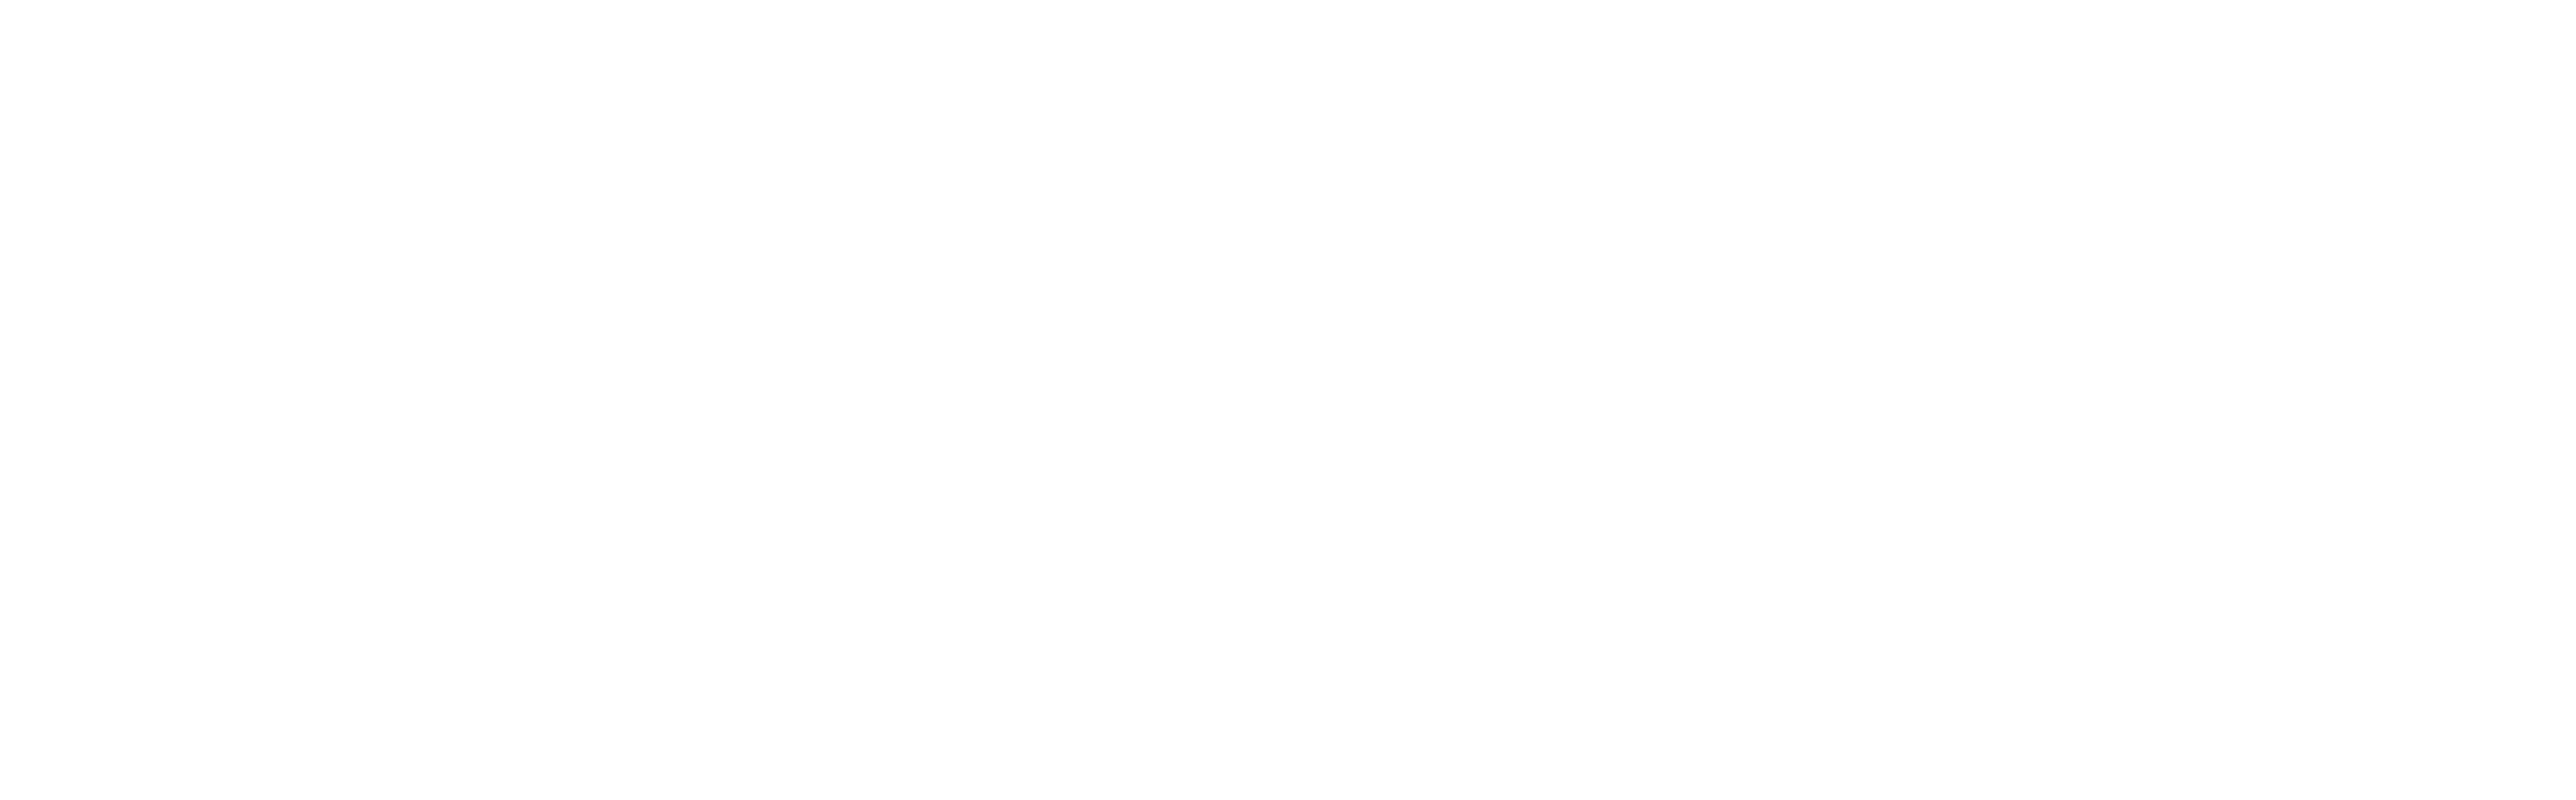 Ultratech ultrasoUltratech ultrasonic technology, logo white